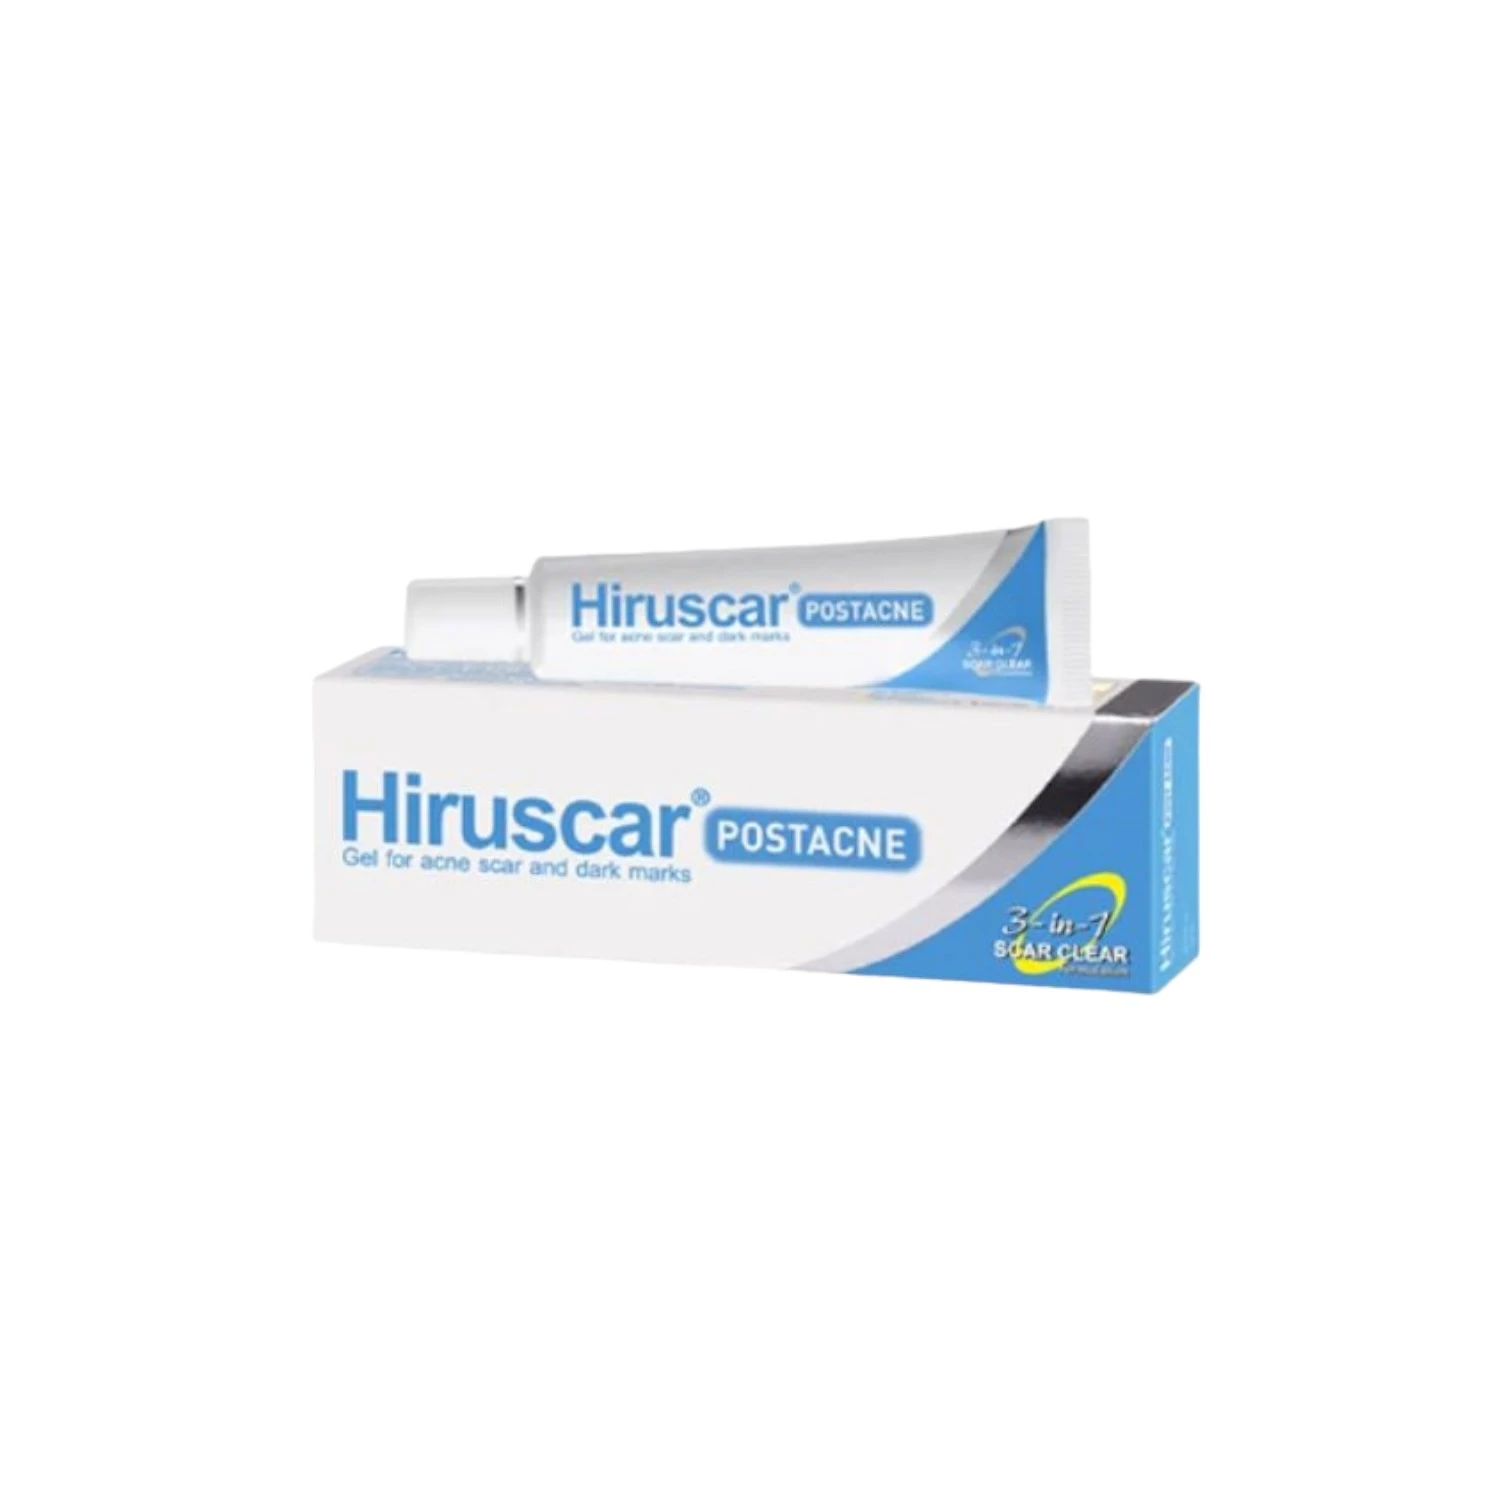 Hiruscar Post Acne 5g 